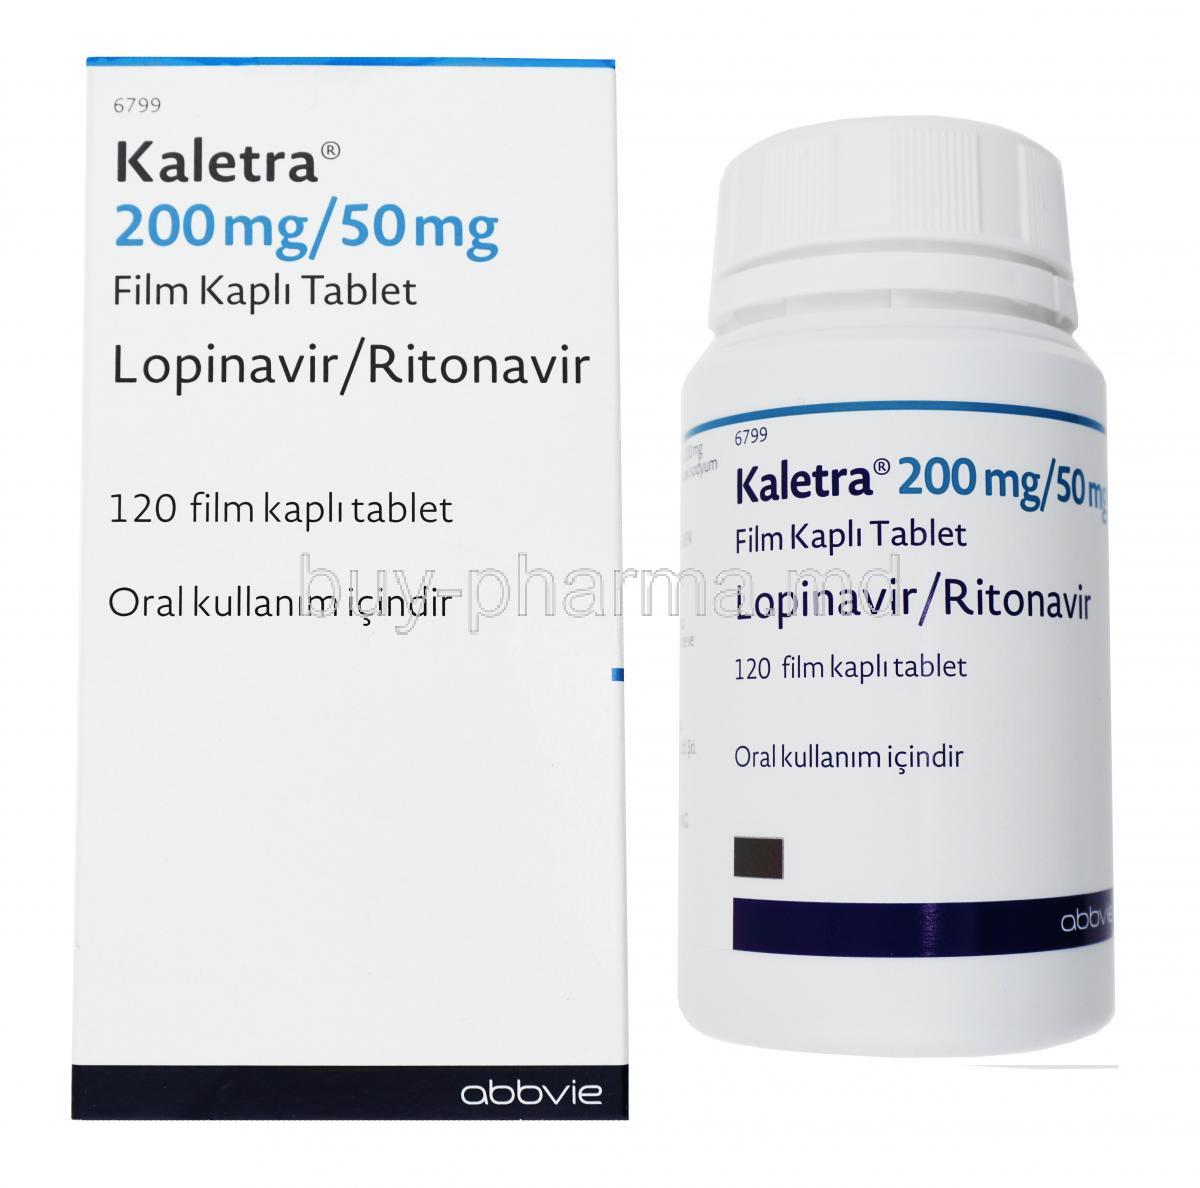 Kaletra, Lopinavir and Ritonavir box and bottle